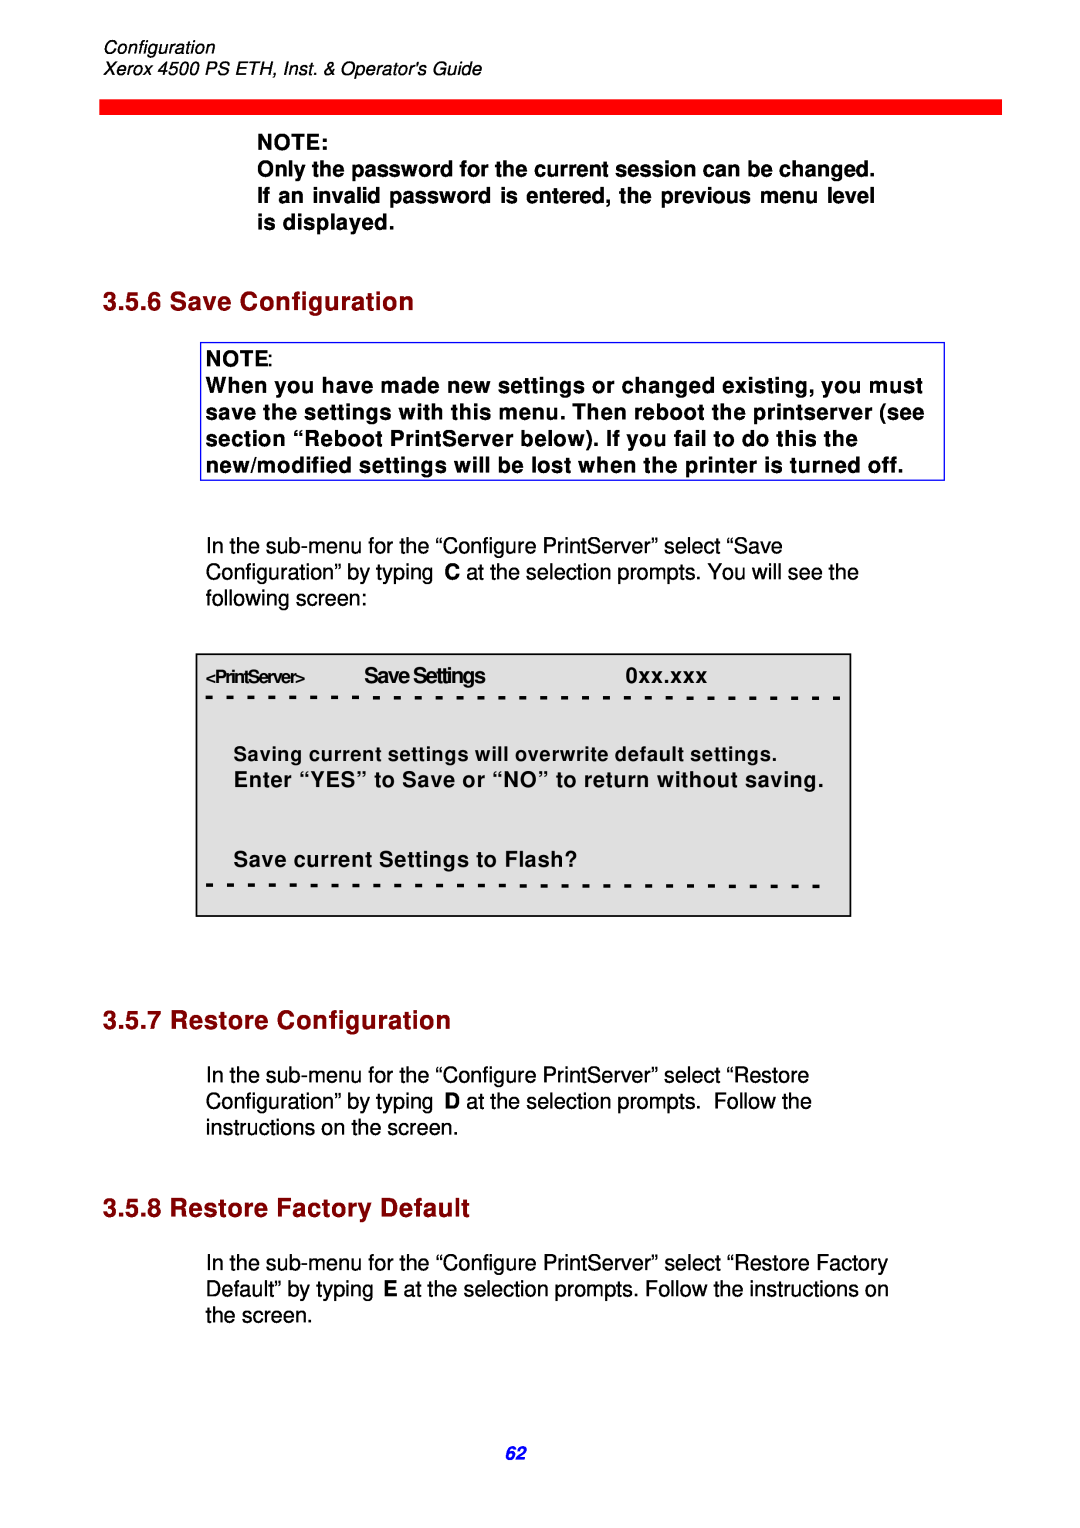 Xerox 4500 ps eth Save Configuration, Restore Configuration, Restore Factory Default, Save current Settings to Flash? 